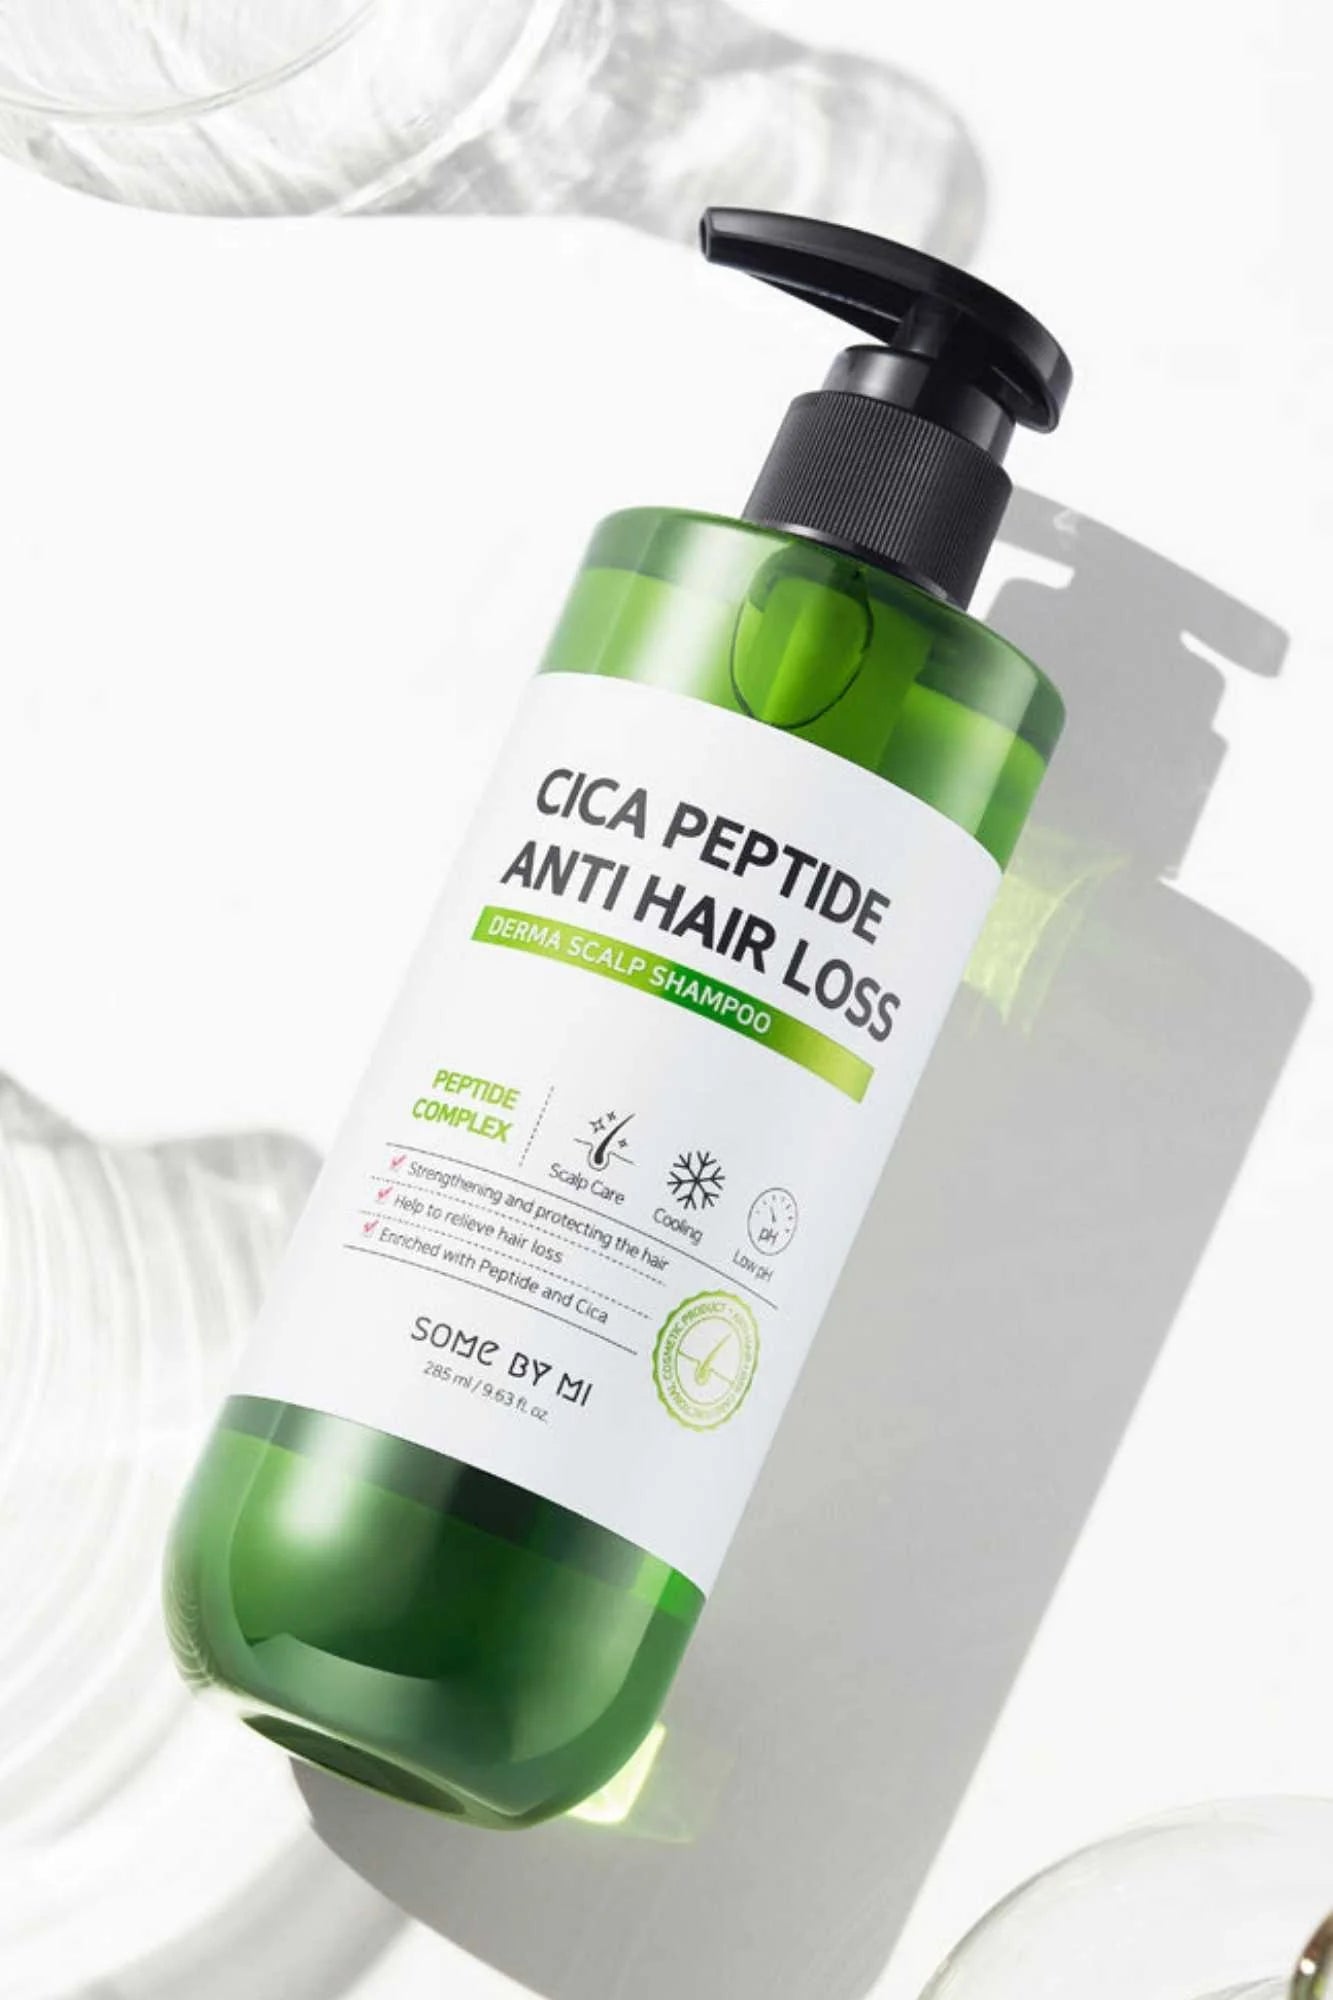 SOME BY MI Cica Peptide Anti Hair Loss Derma Scalp Shampoo 285ml